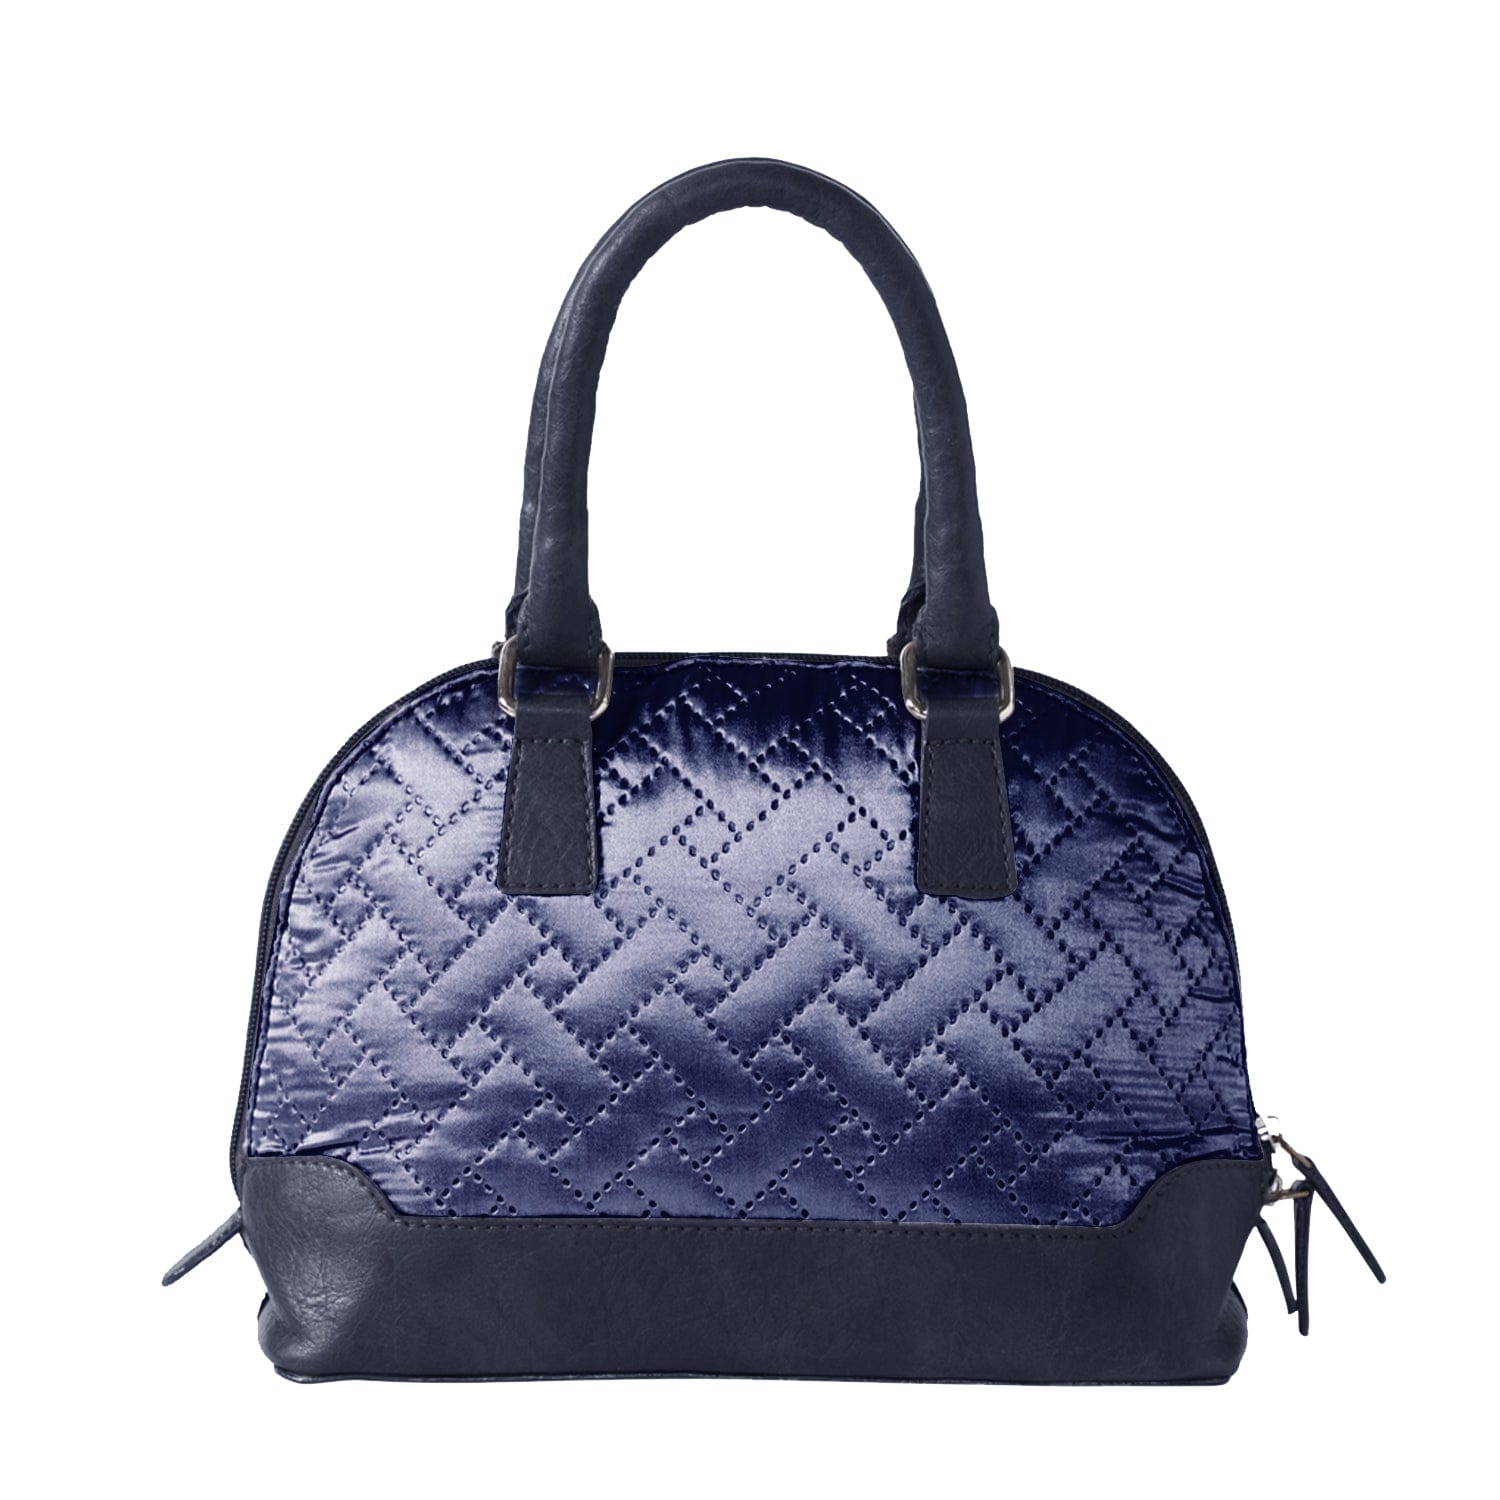 Mona B Small Handbag, Shoulder Bags For Shopping Travel With Stylish Design For Women: NAV - QRP-301 NAV - Handbag by Mona-B - Backpack, Flash Sale, Flat50, New Arrivals, Sale, Shop1999, Shop2999, Shop3999